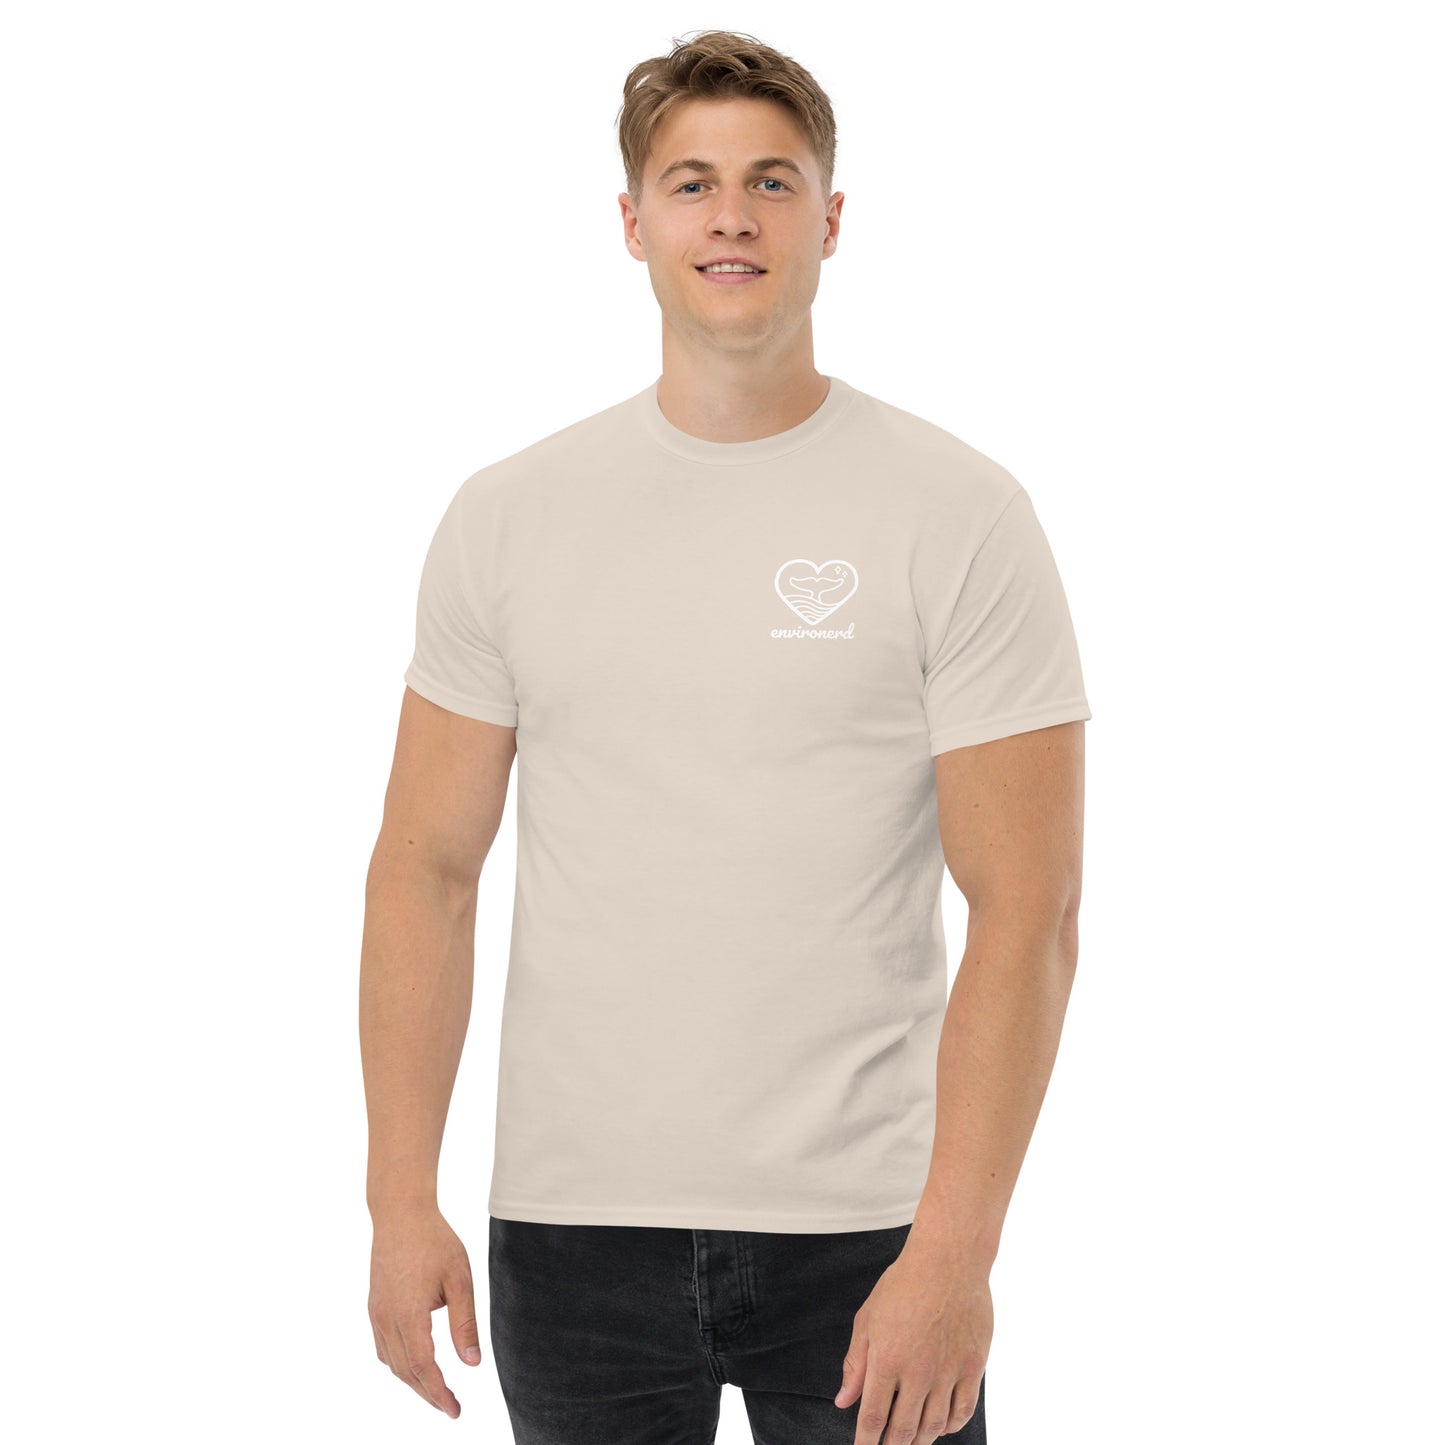 Zuma Beach Gray Whale Unisex T-Shirt